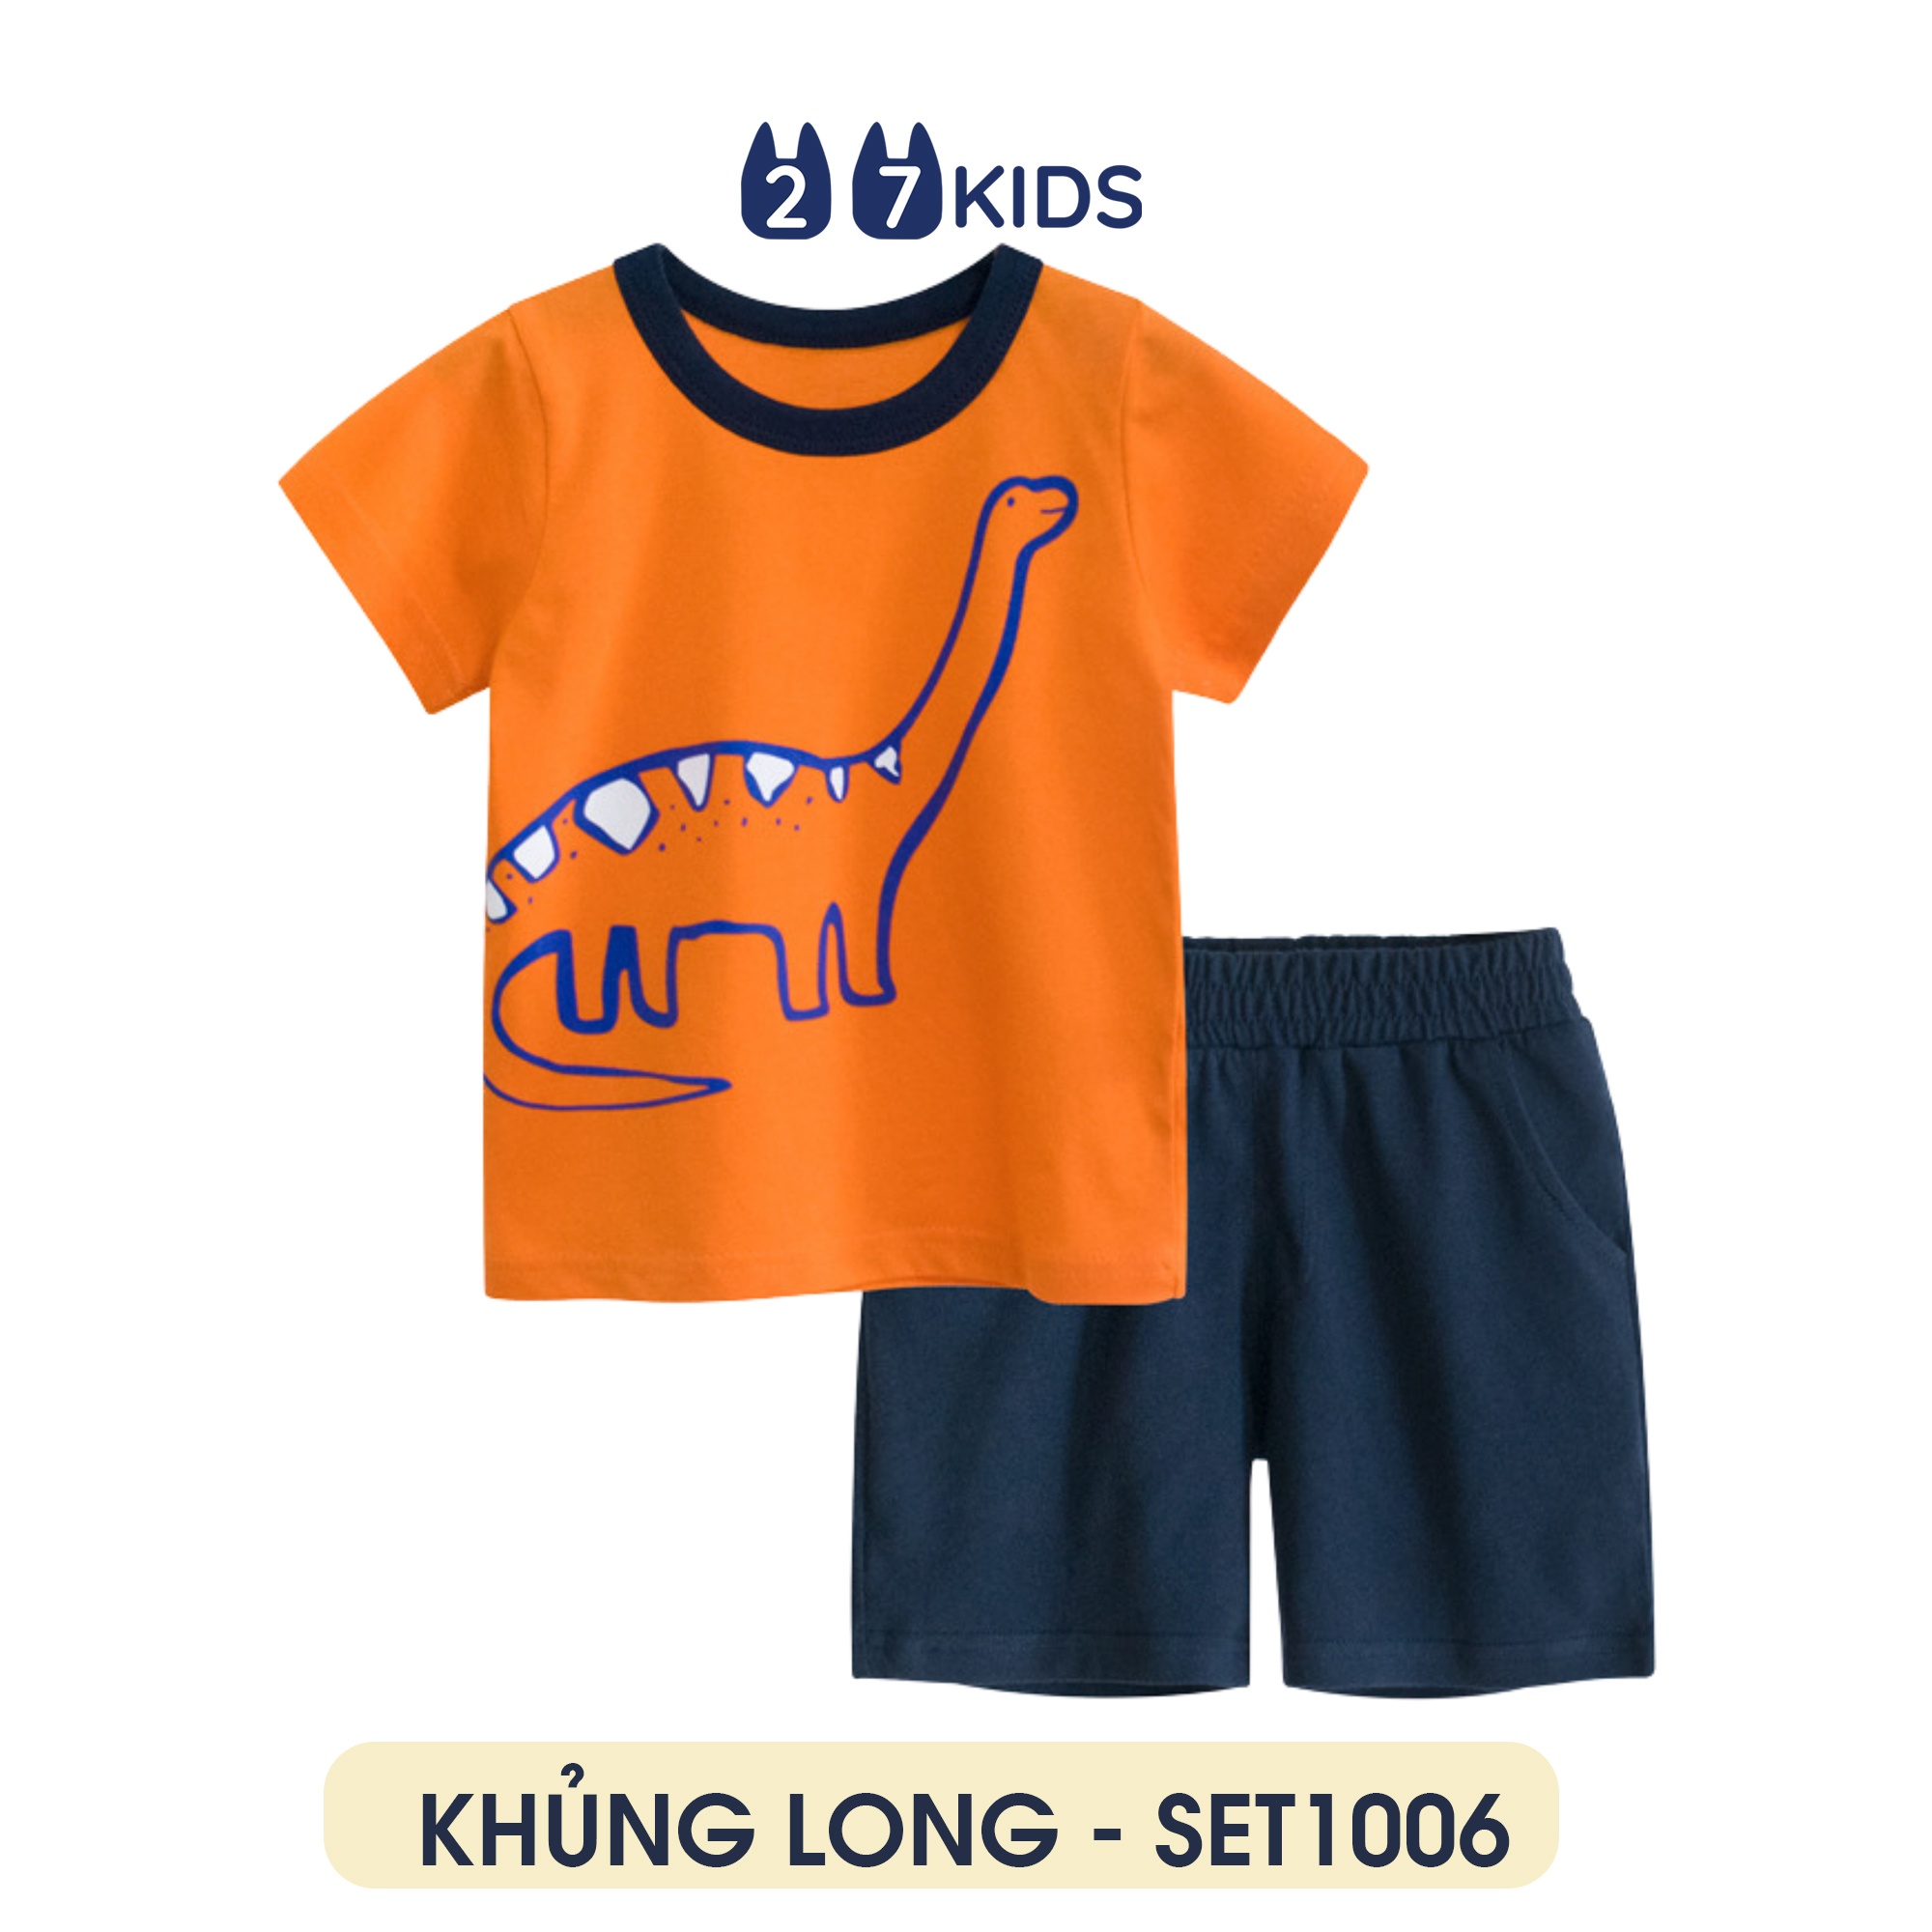 Bộ quần áo trẻ em 27Kids set quần áo thun cotton KHỦNG LONG - SET1006